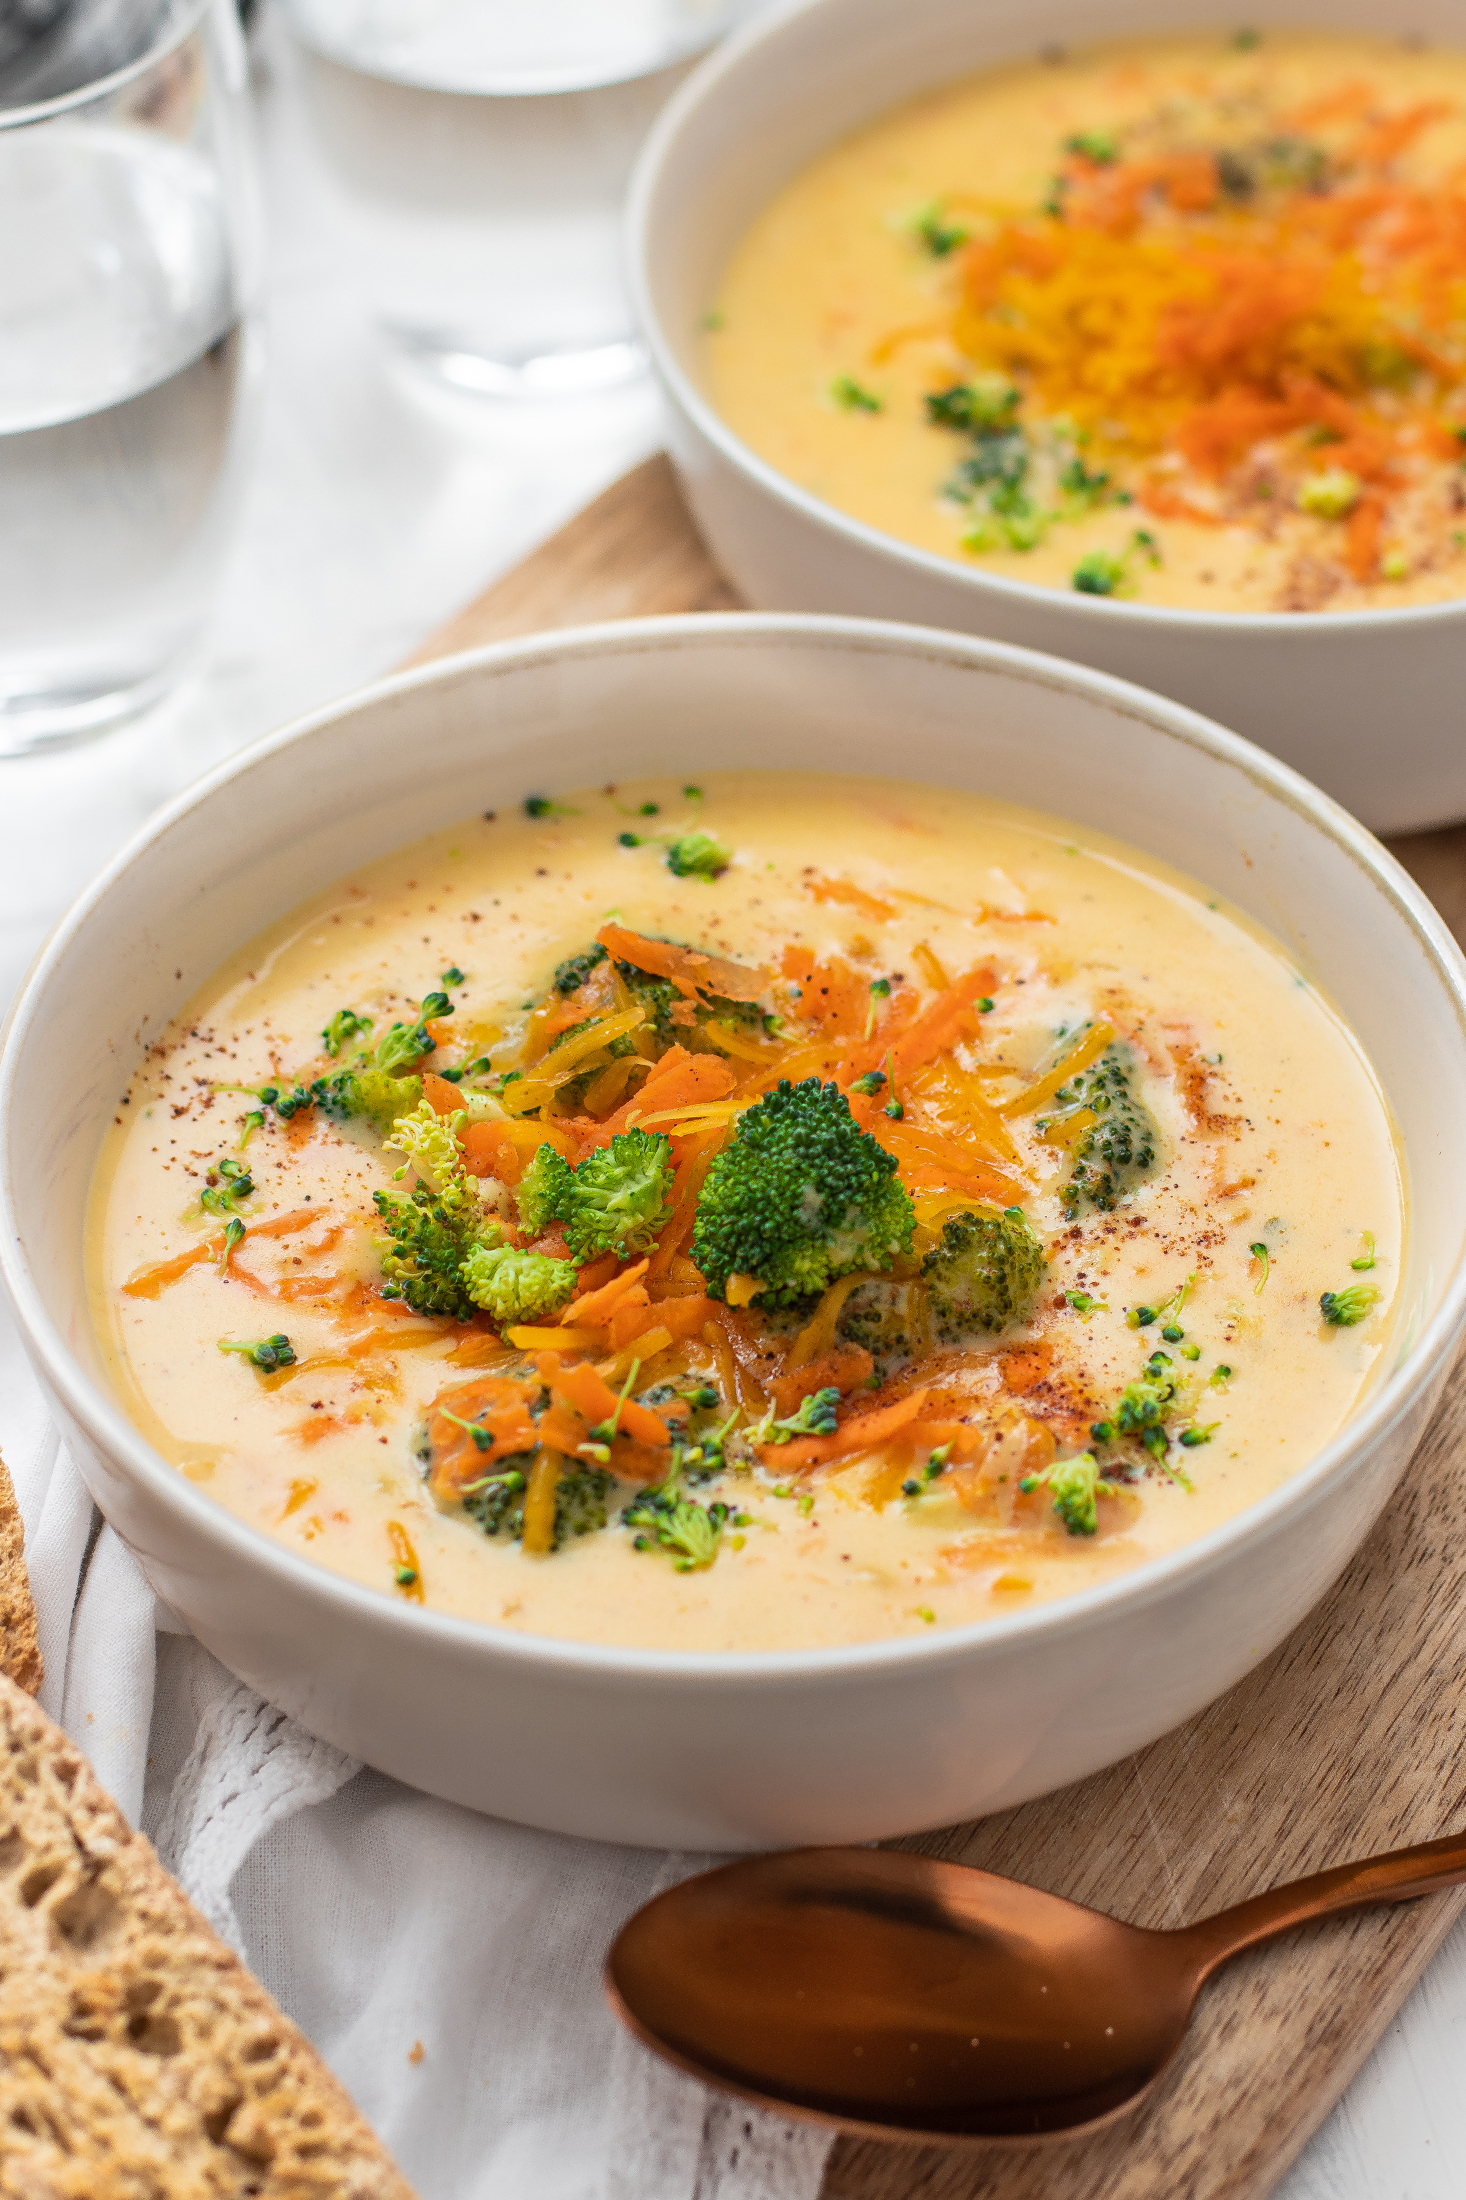 Panera's Broccoli Cheddar Soup